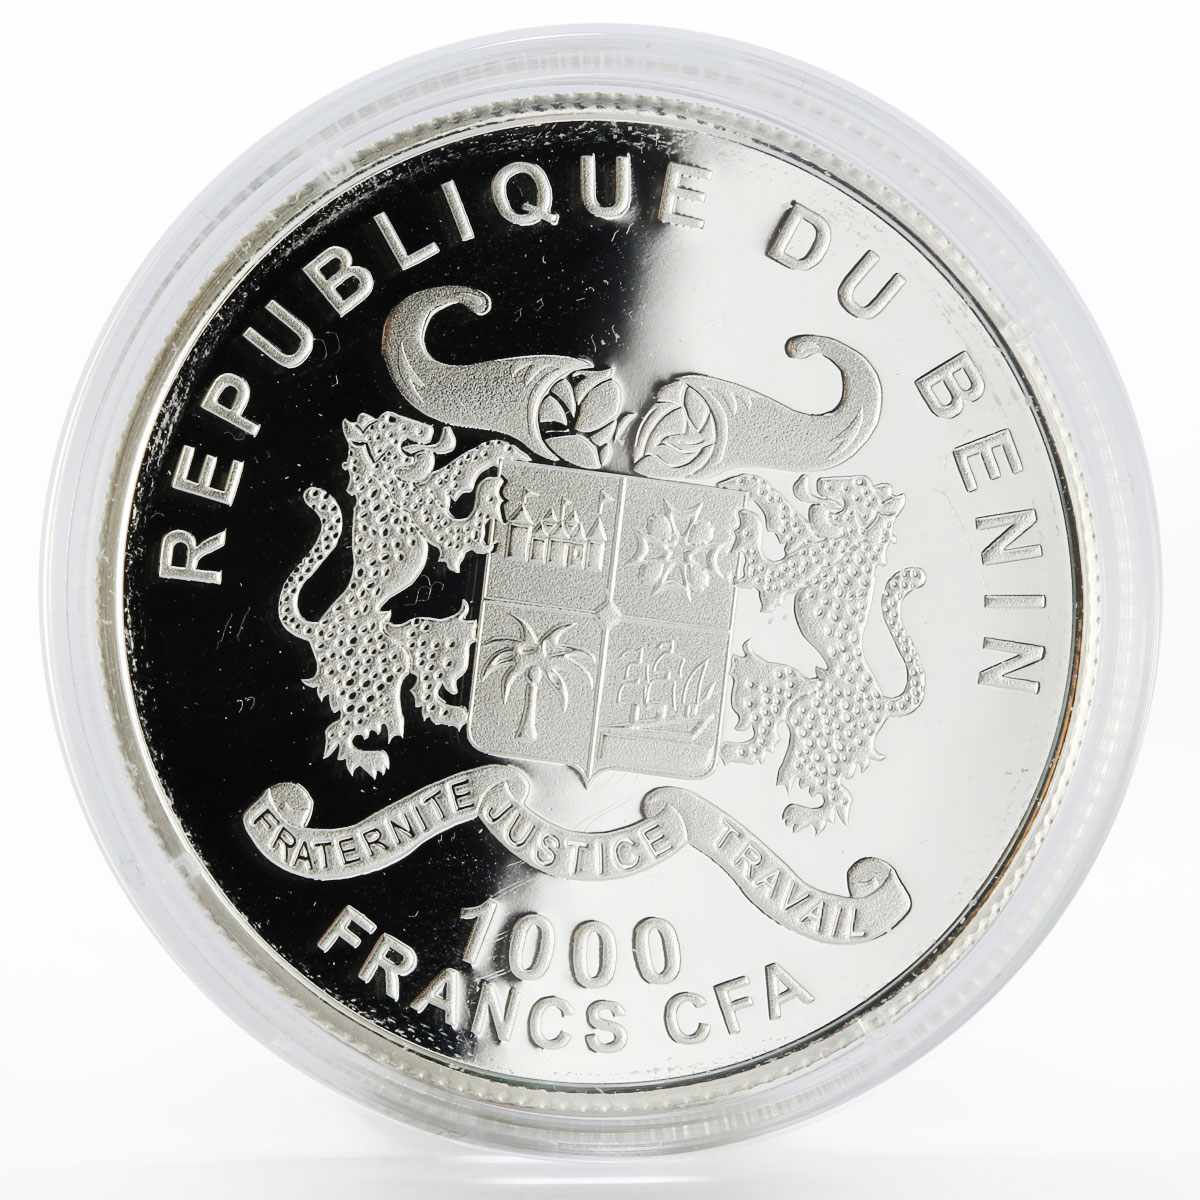 Benin 1000 francs Vladimir Vysotsky colored proof silver coin 2015